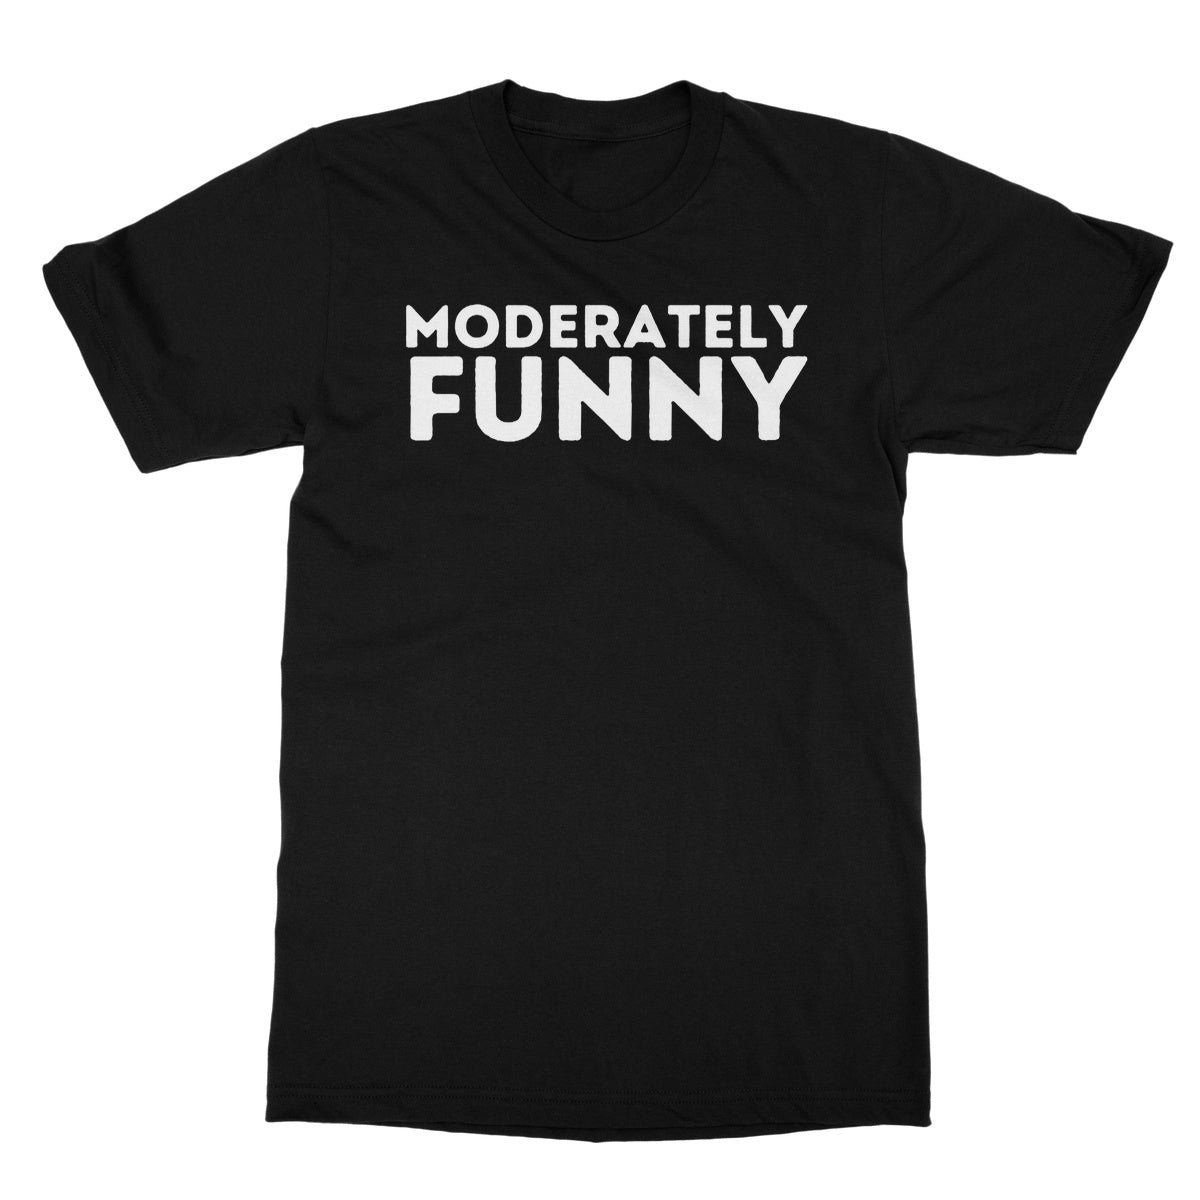 moderately funny t shirt black